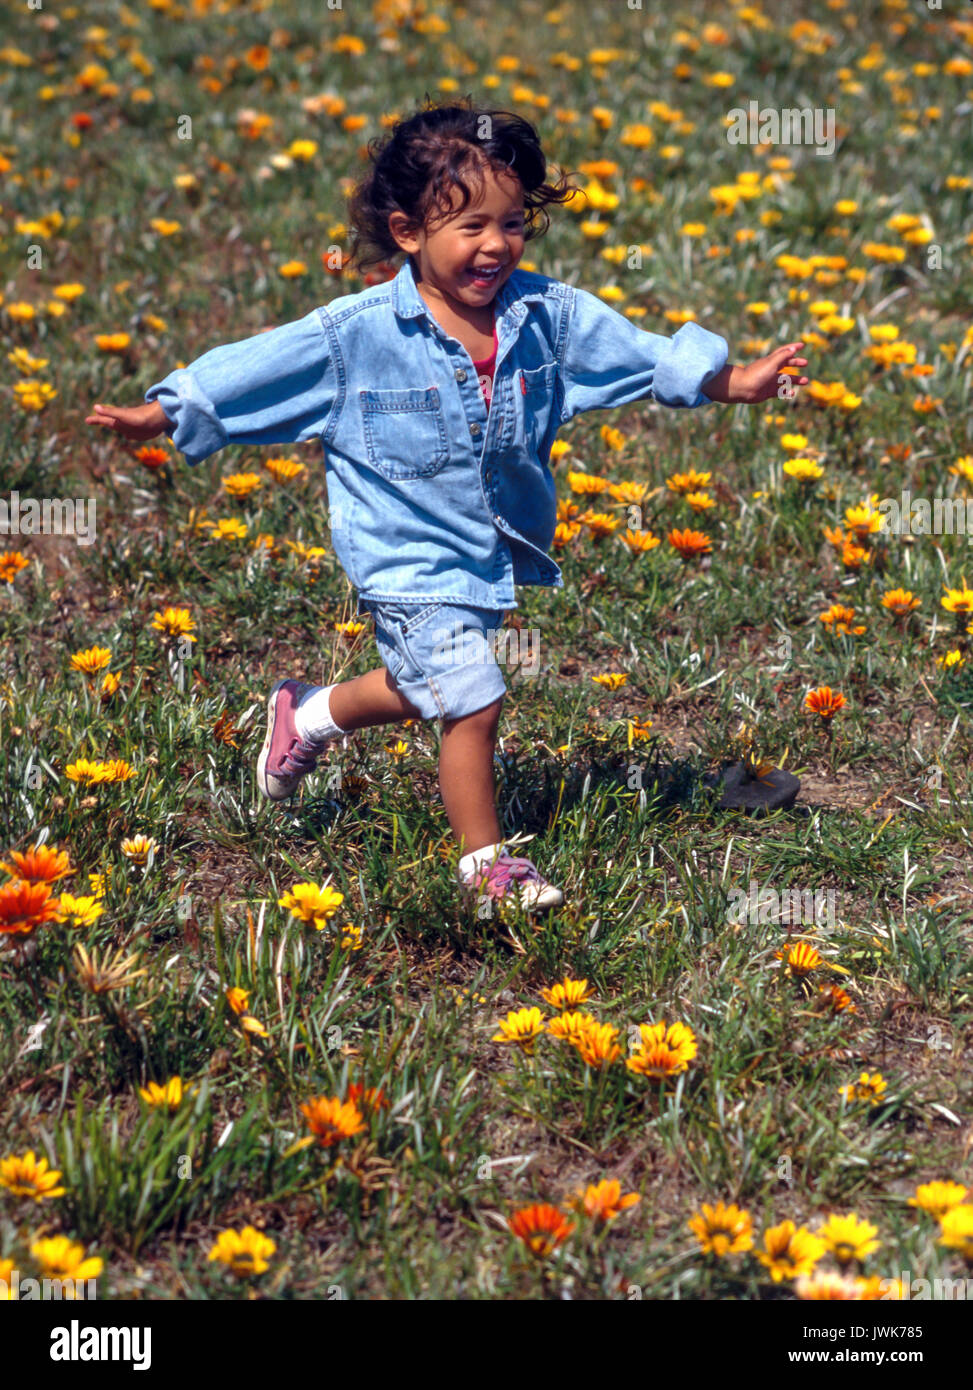 Small pre-k girl running in grassy flower field summer child,3, Stock Photo